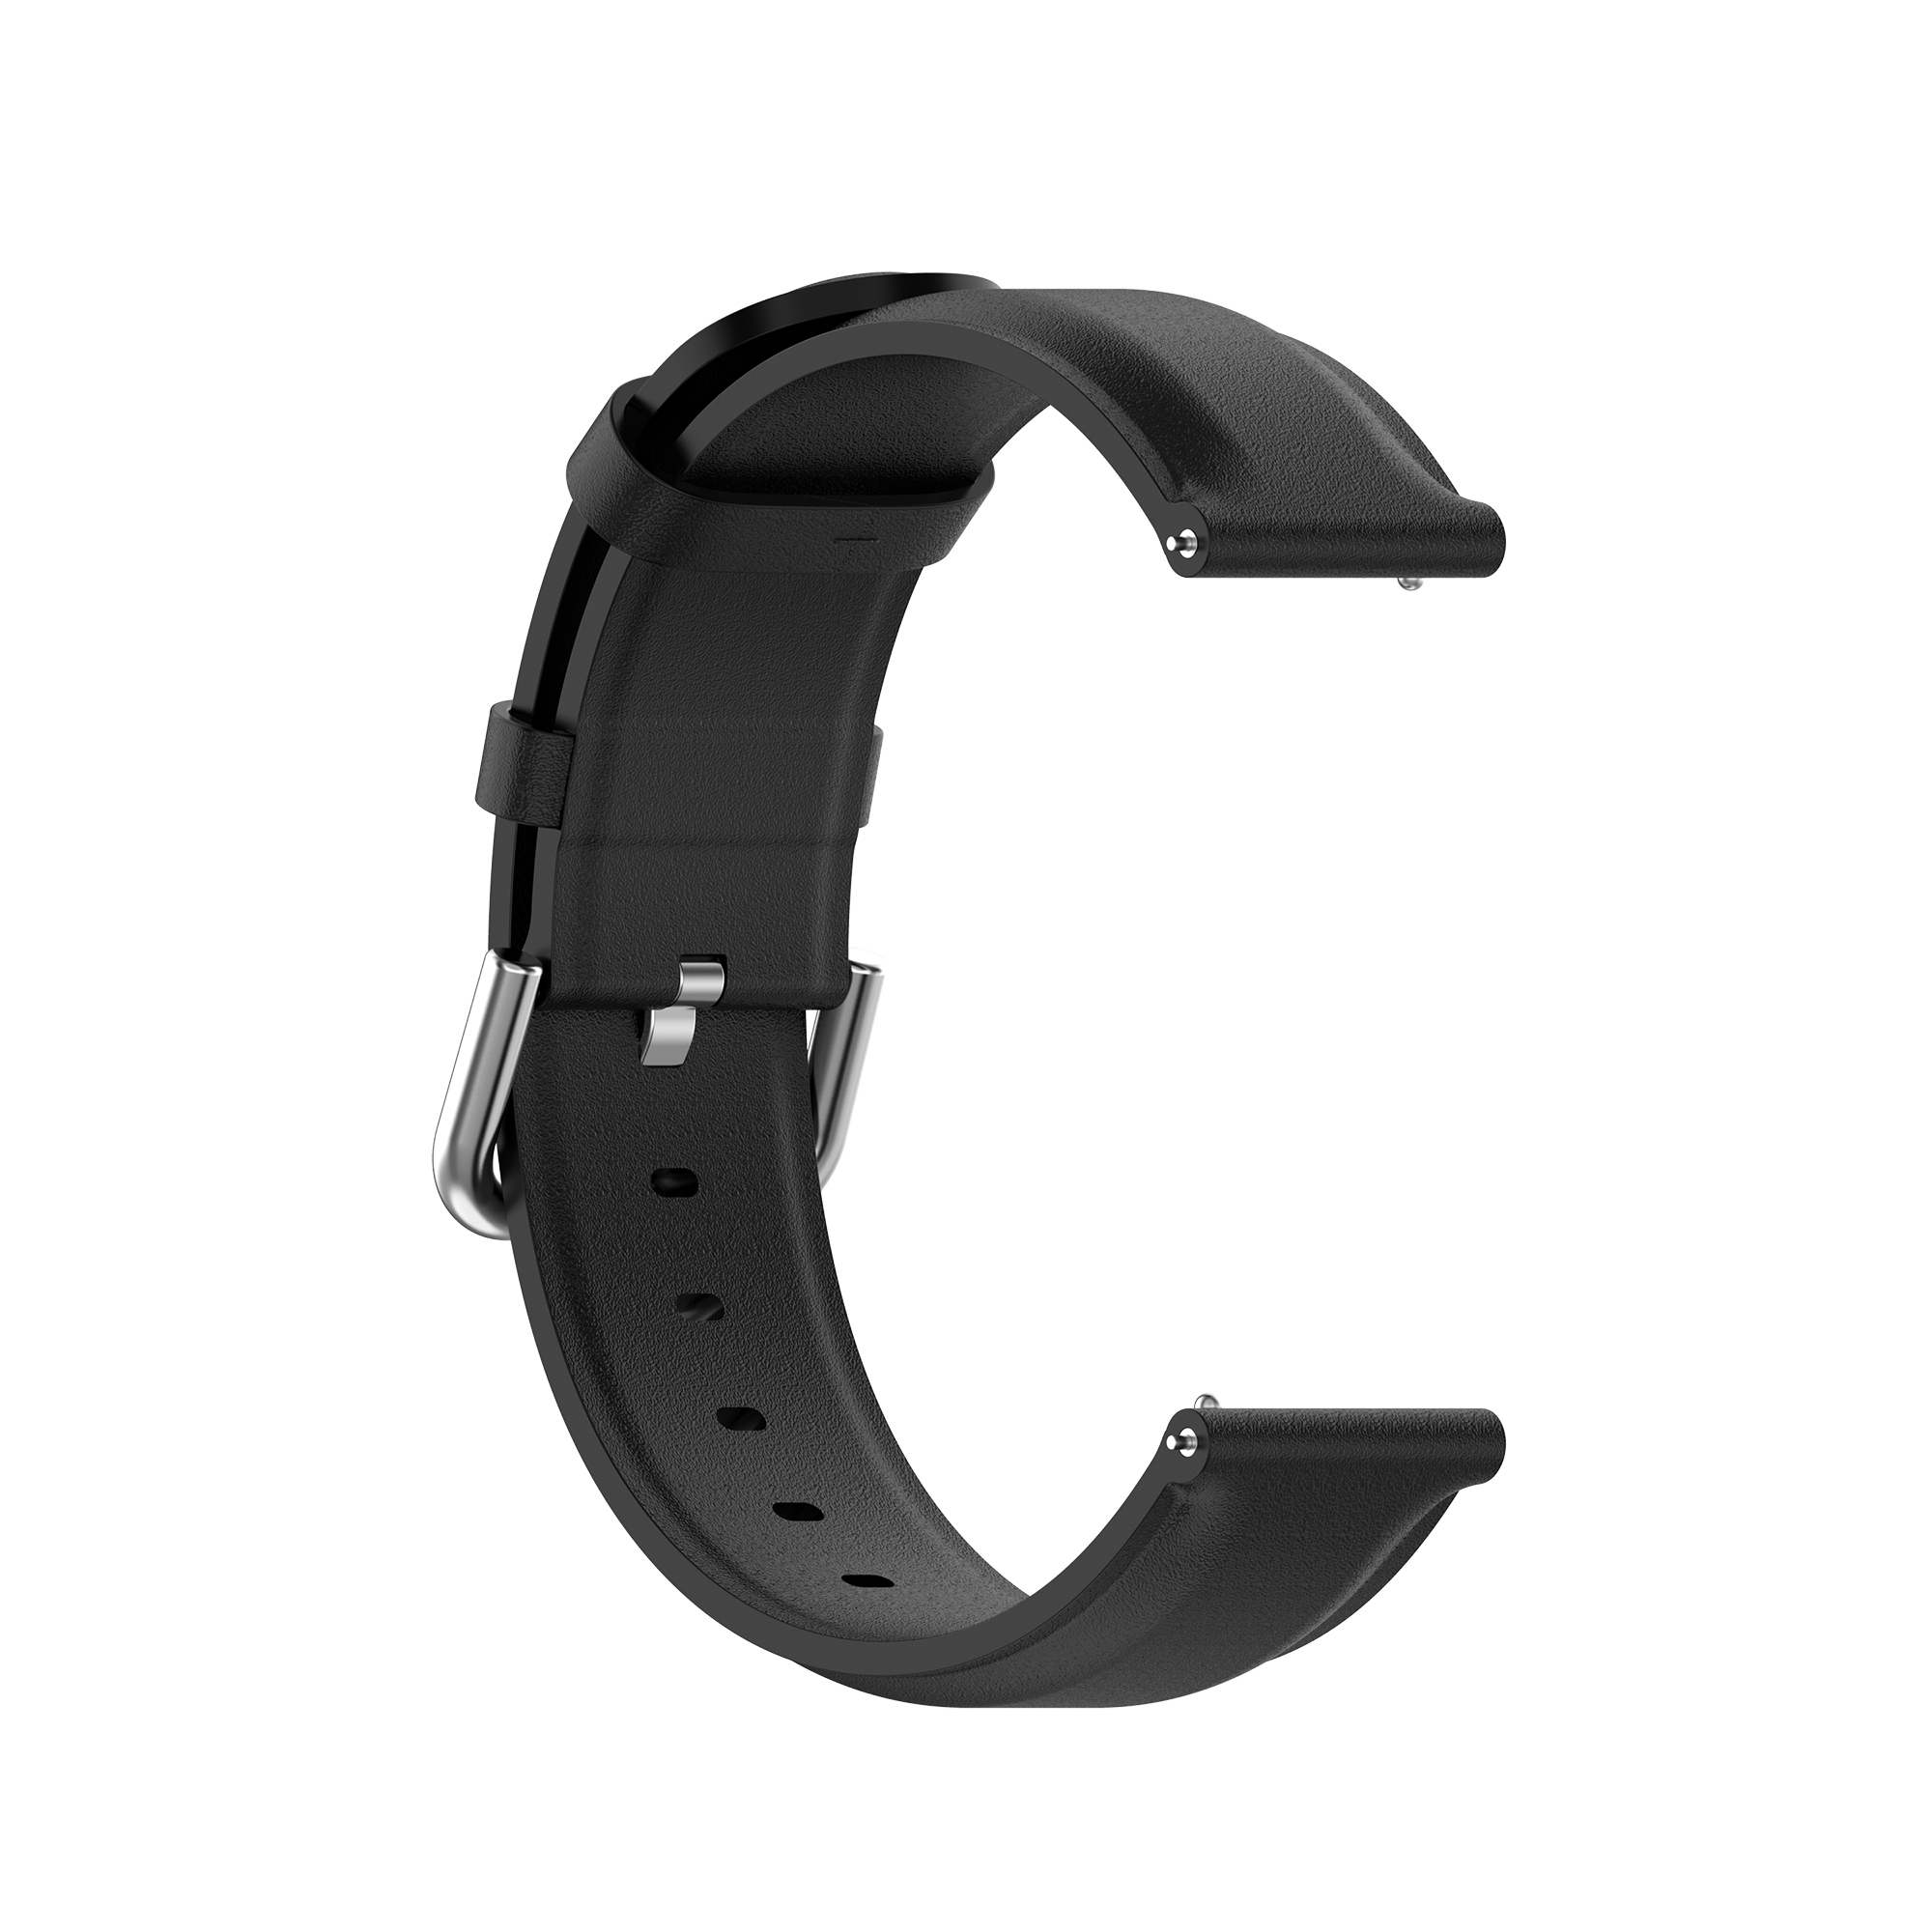 22mm-Universal-Watch-Band-Round-Tail-Leather-Watch-Strap-for-Huawei-Watch-GT2-Pro-Zeblaze-GTS-BW-HL3-1765660-16